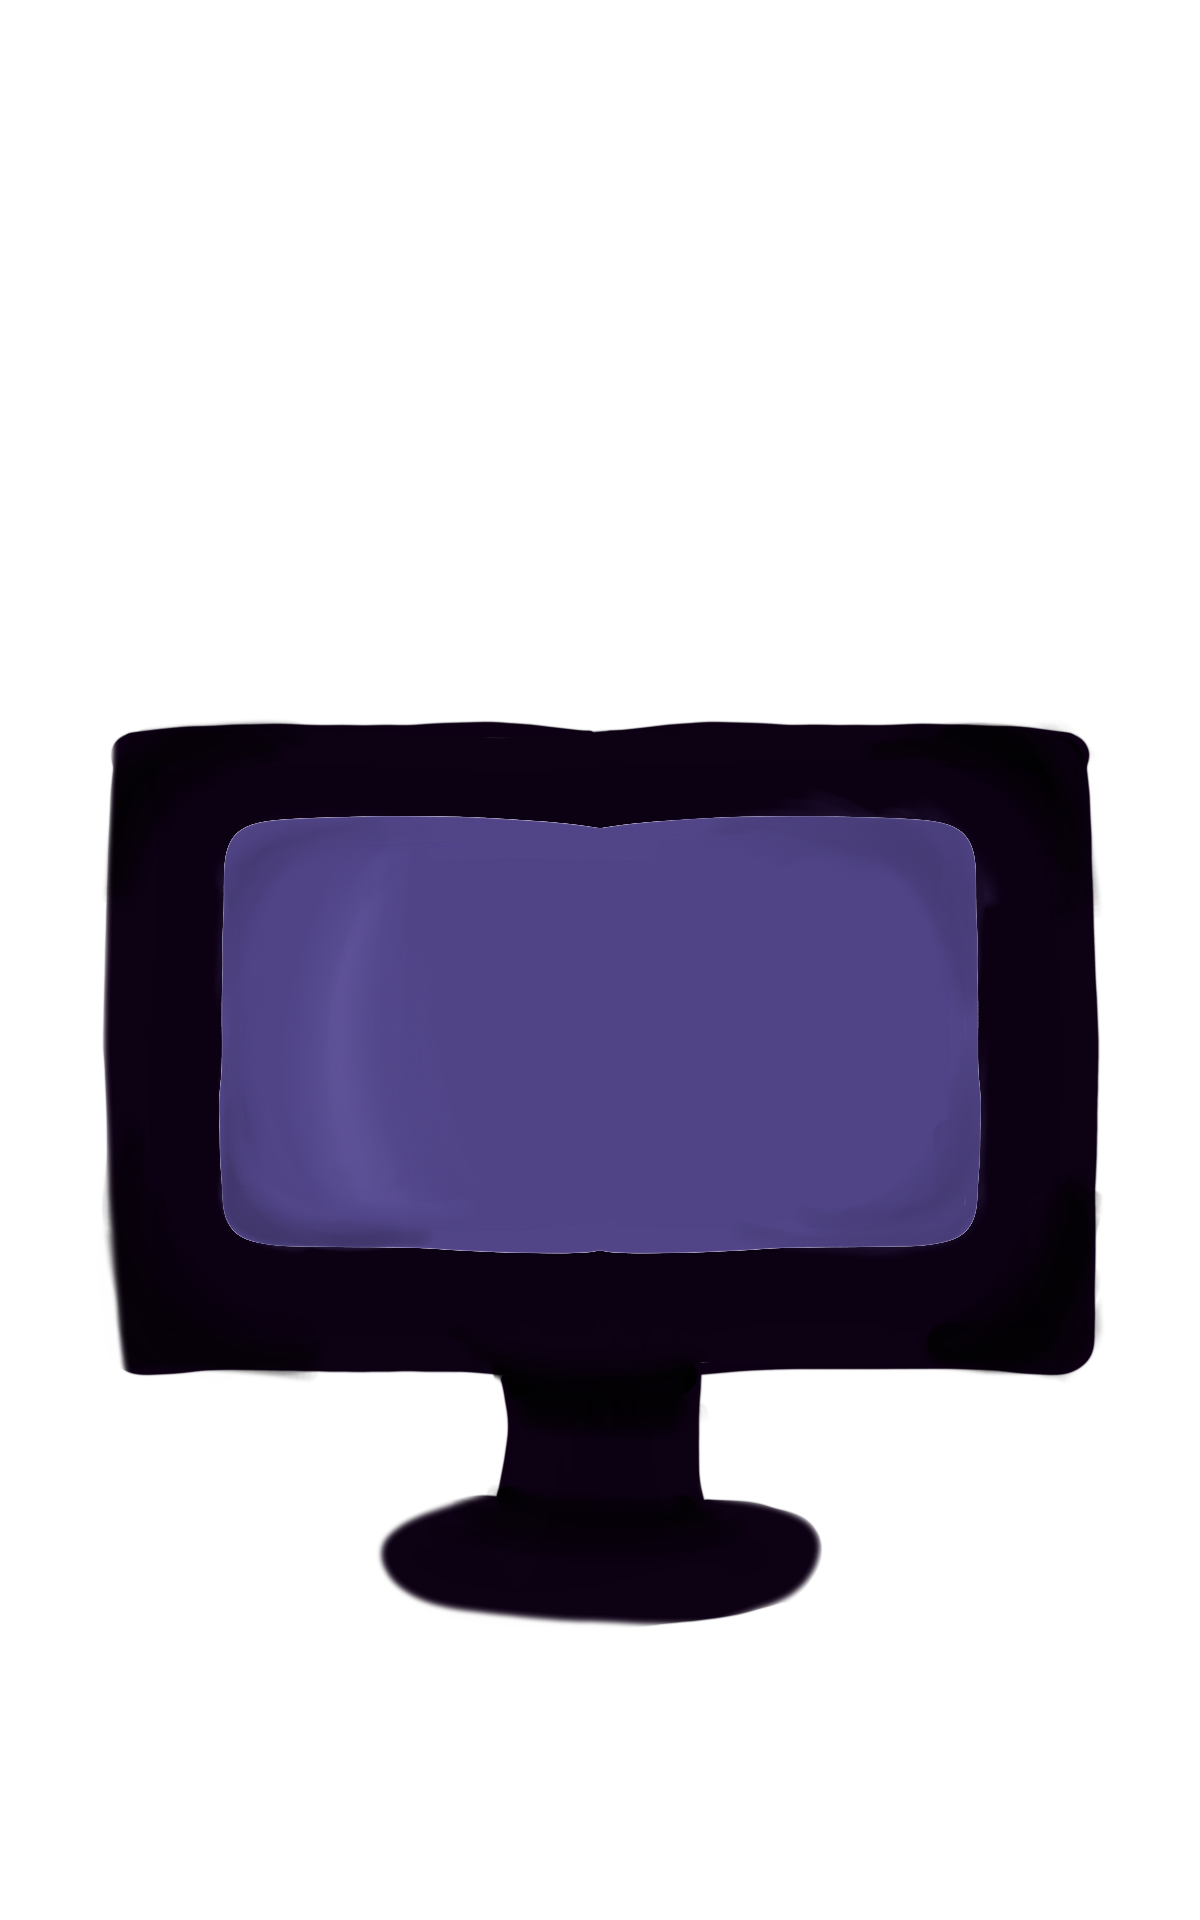 dark purple flatscreen tv